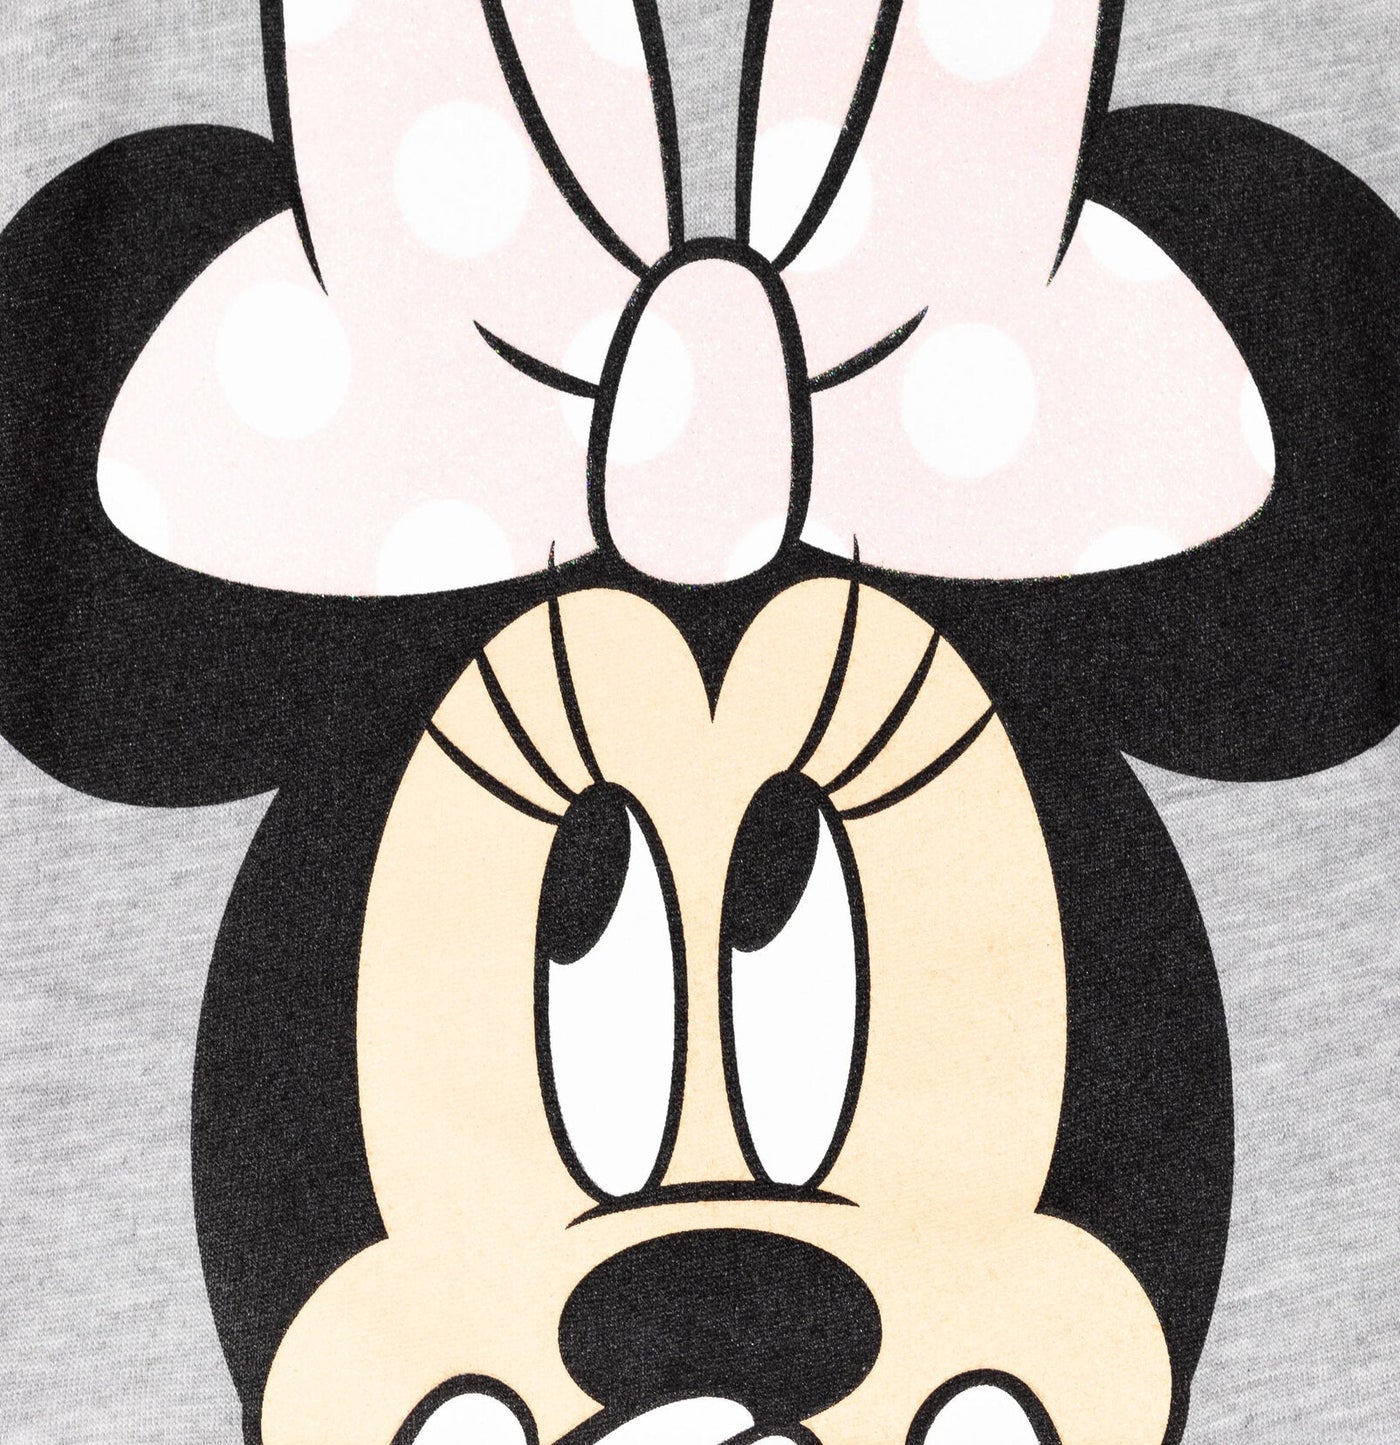 Disney Minnie Mouse Fleece Sweatshirt and Pants Set - imagikids